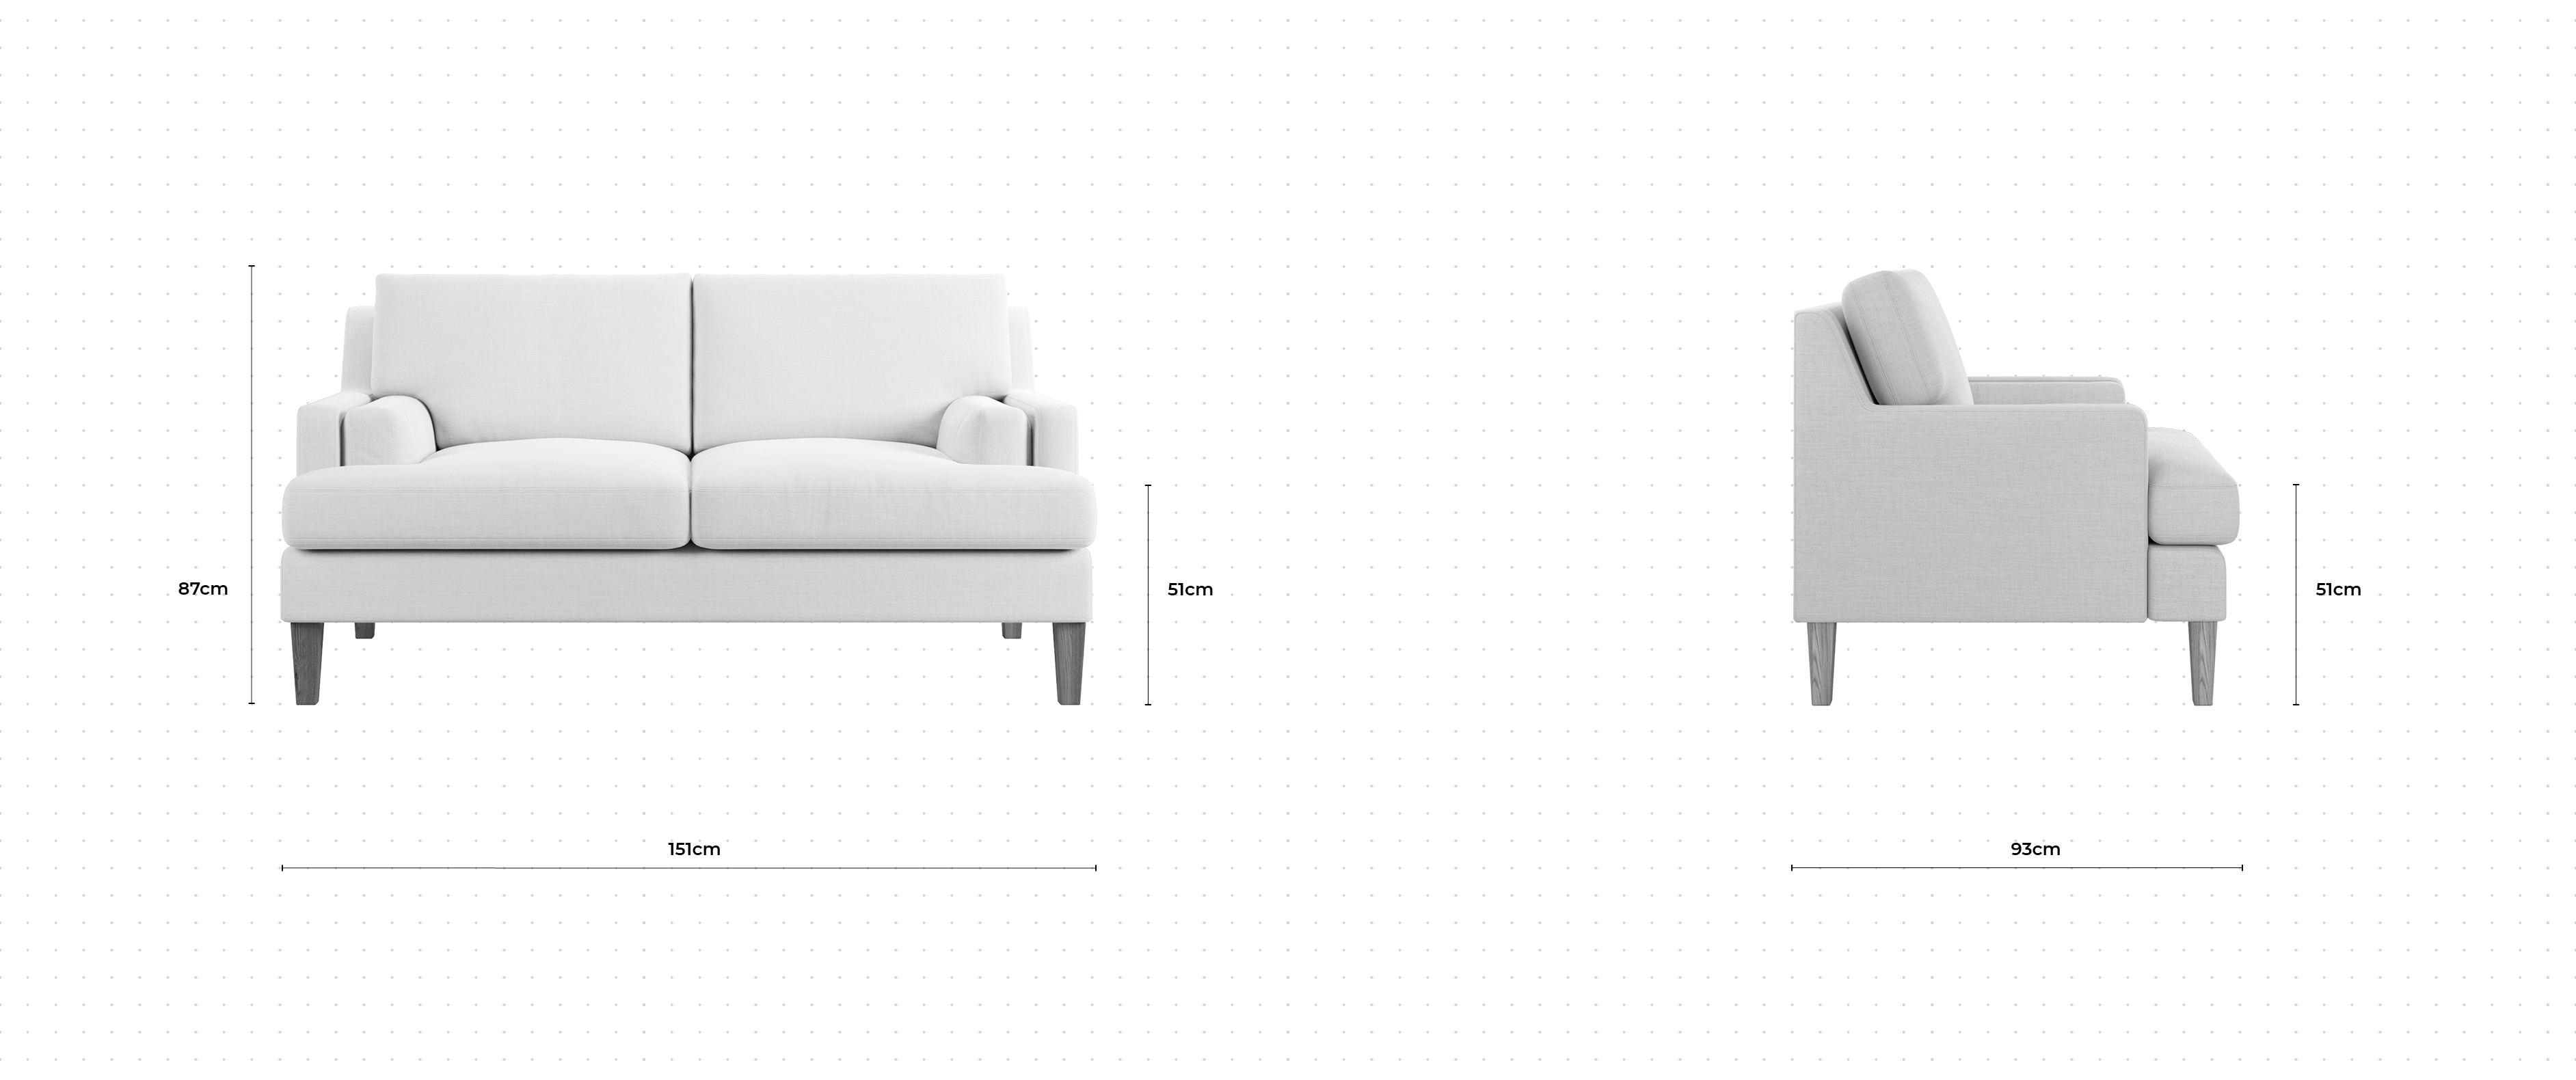 Francis 2 Seater Sofa dimensions